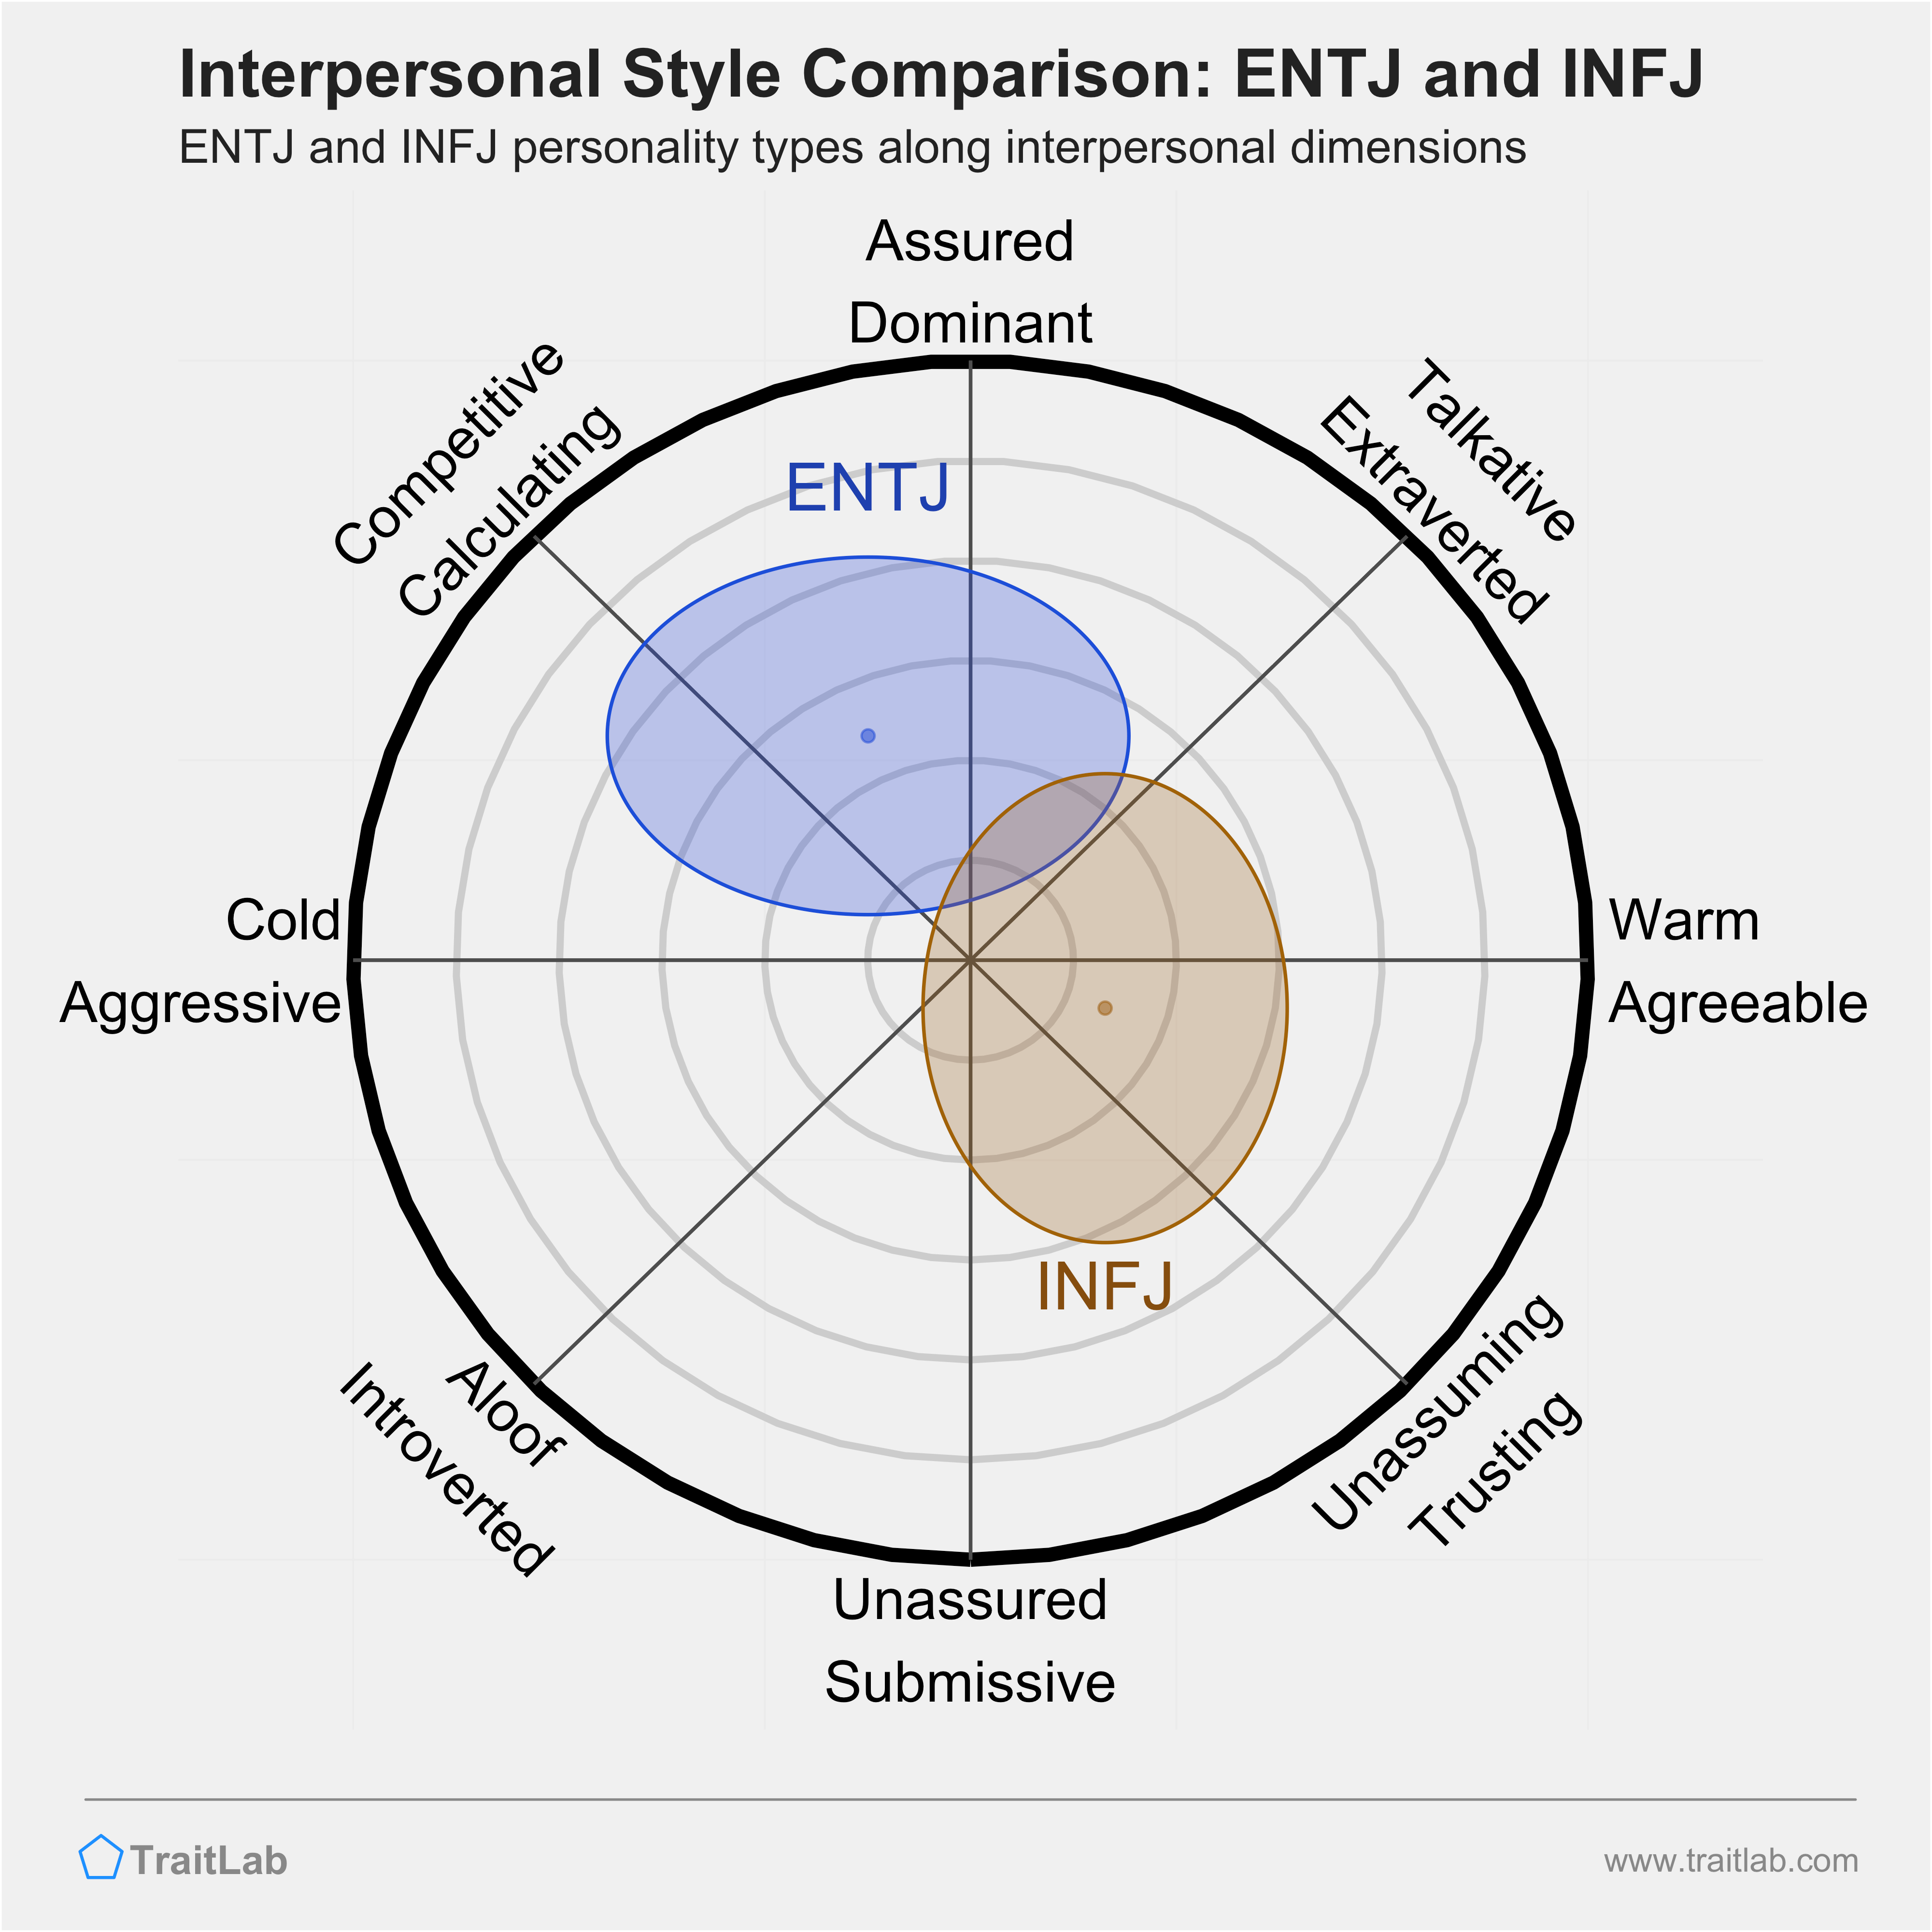 ENTJ and INFJ comparison across interpersonal dimensions